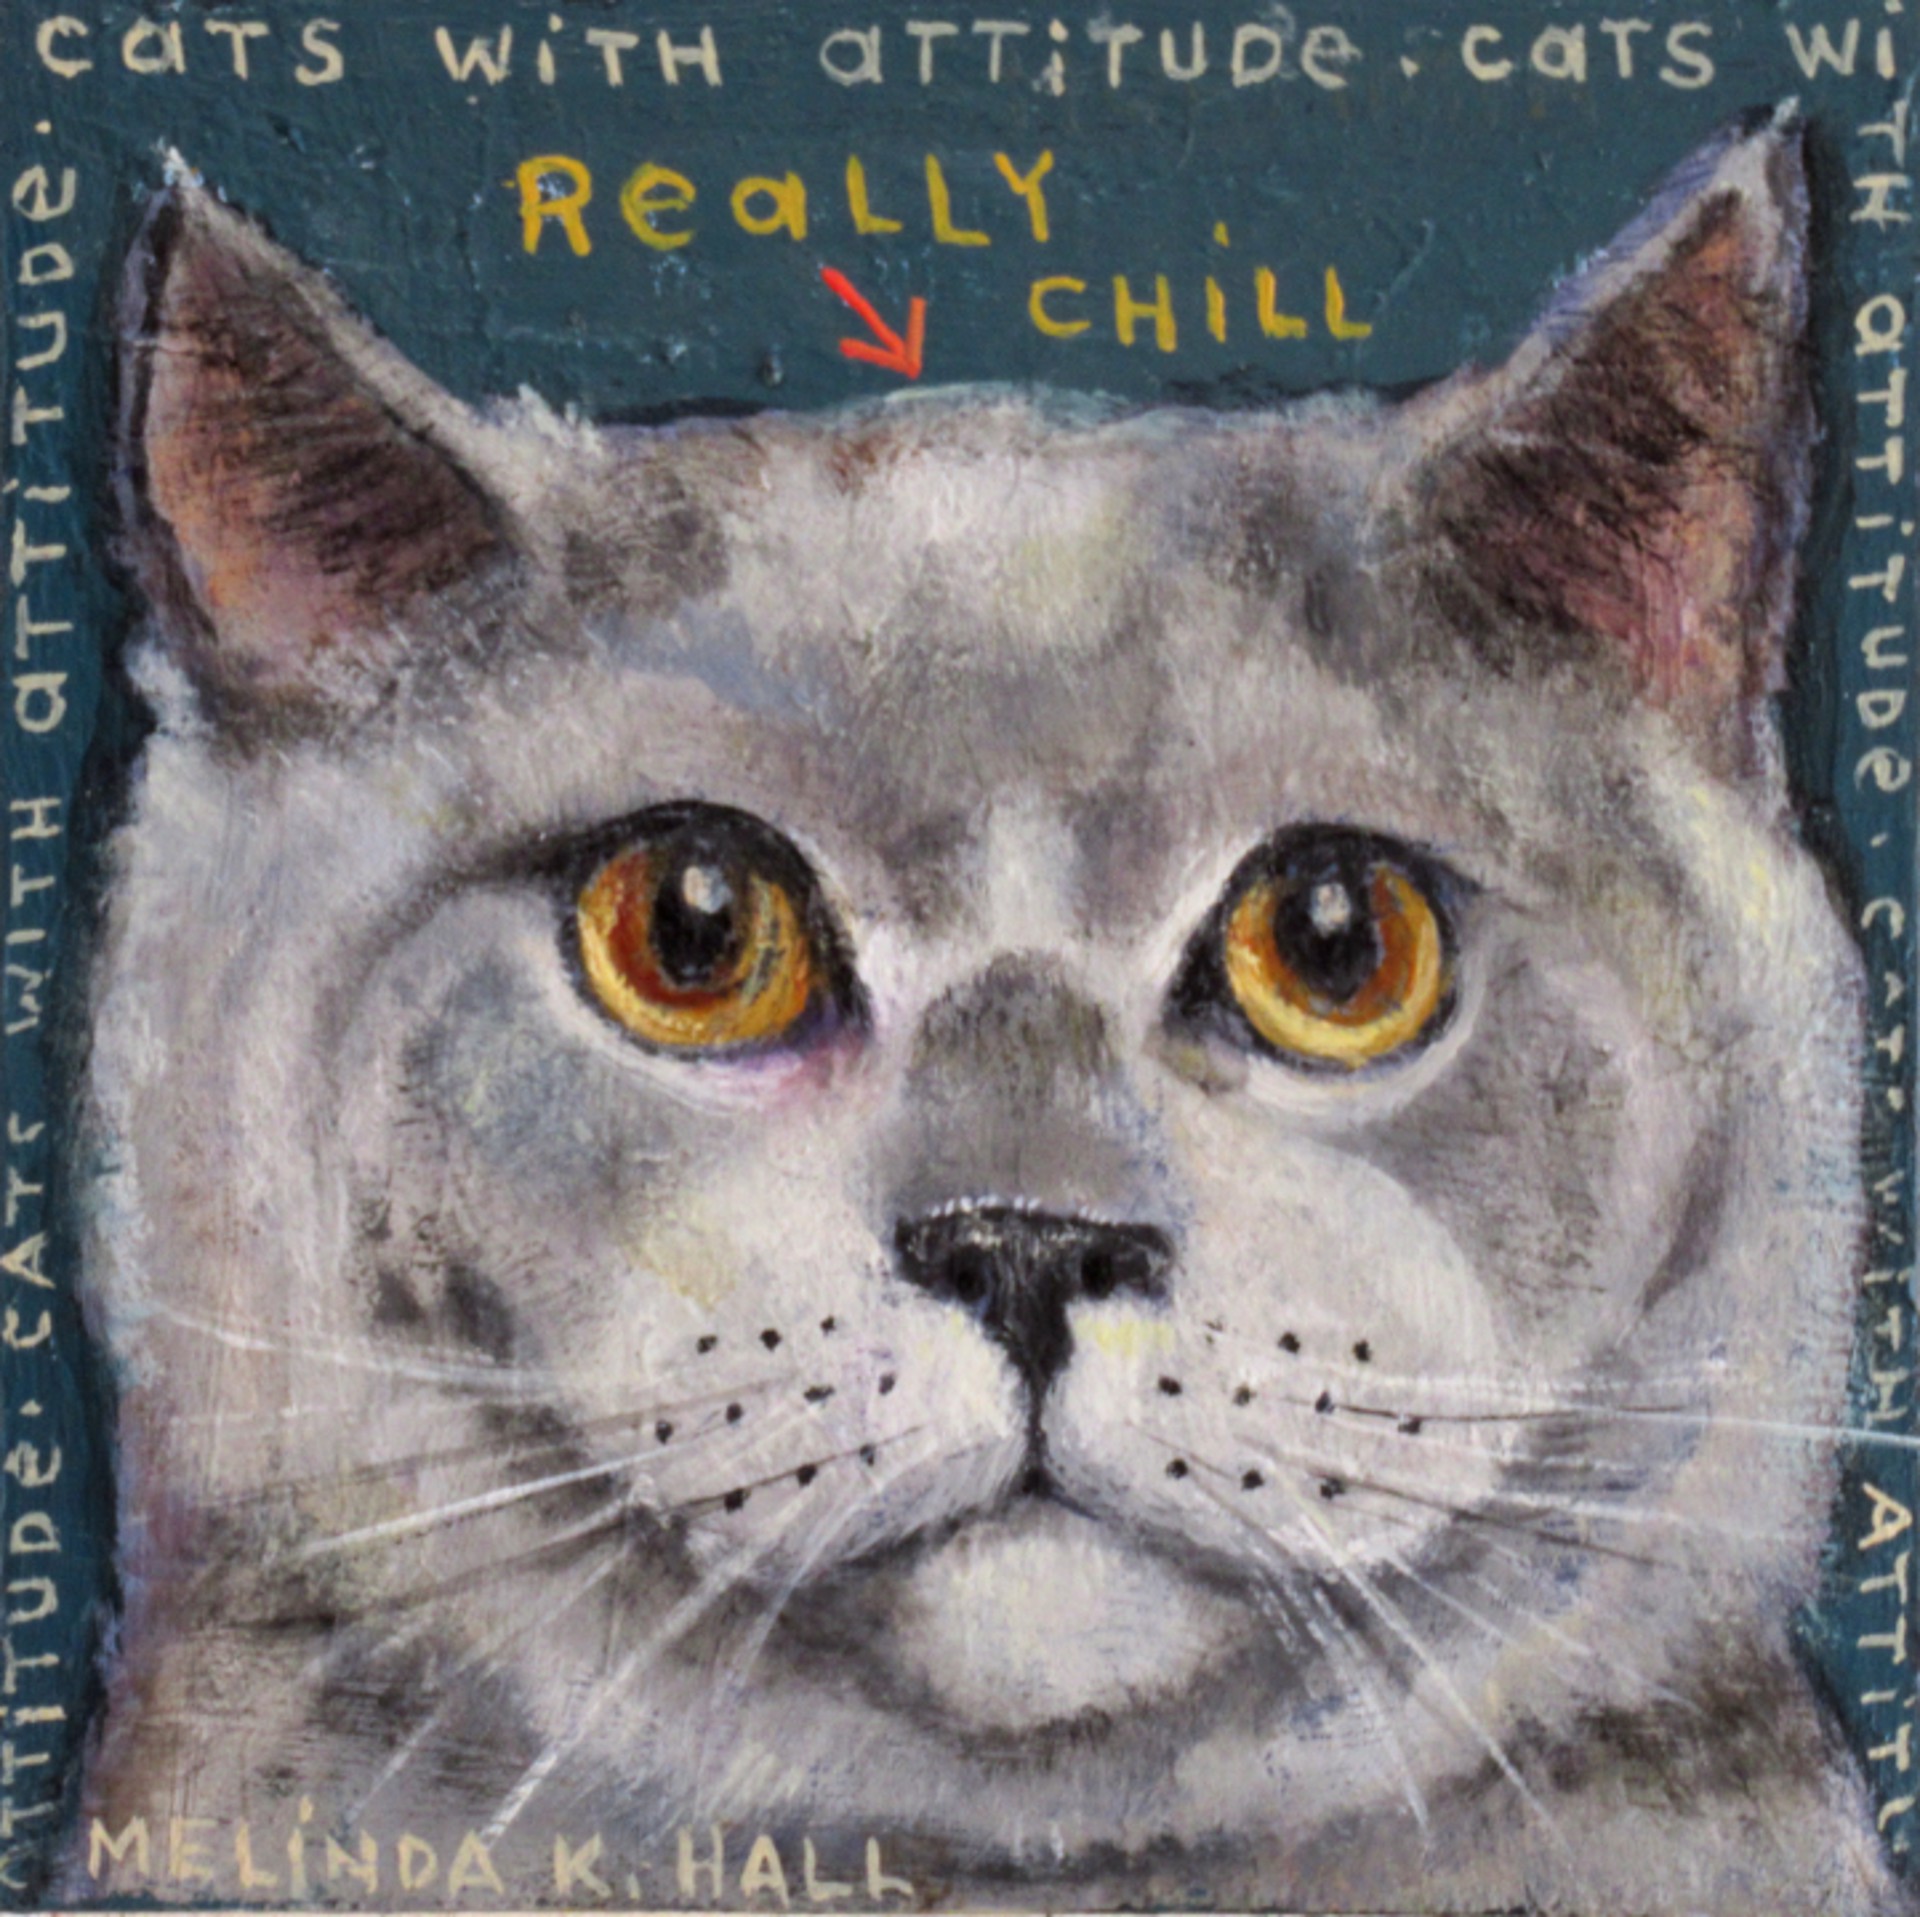 Cats with Attitude: Really Chill by Melinda K. Hall